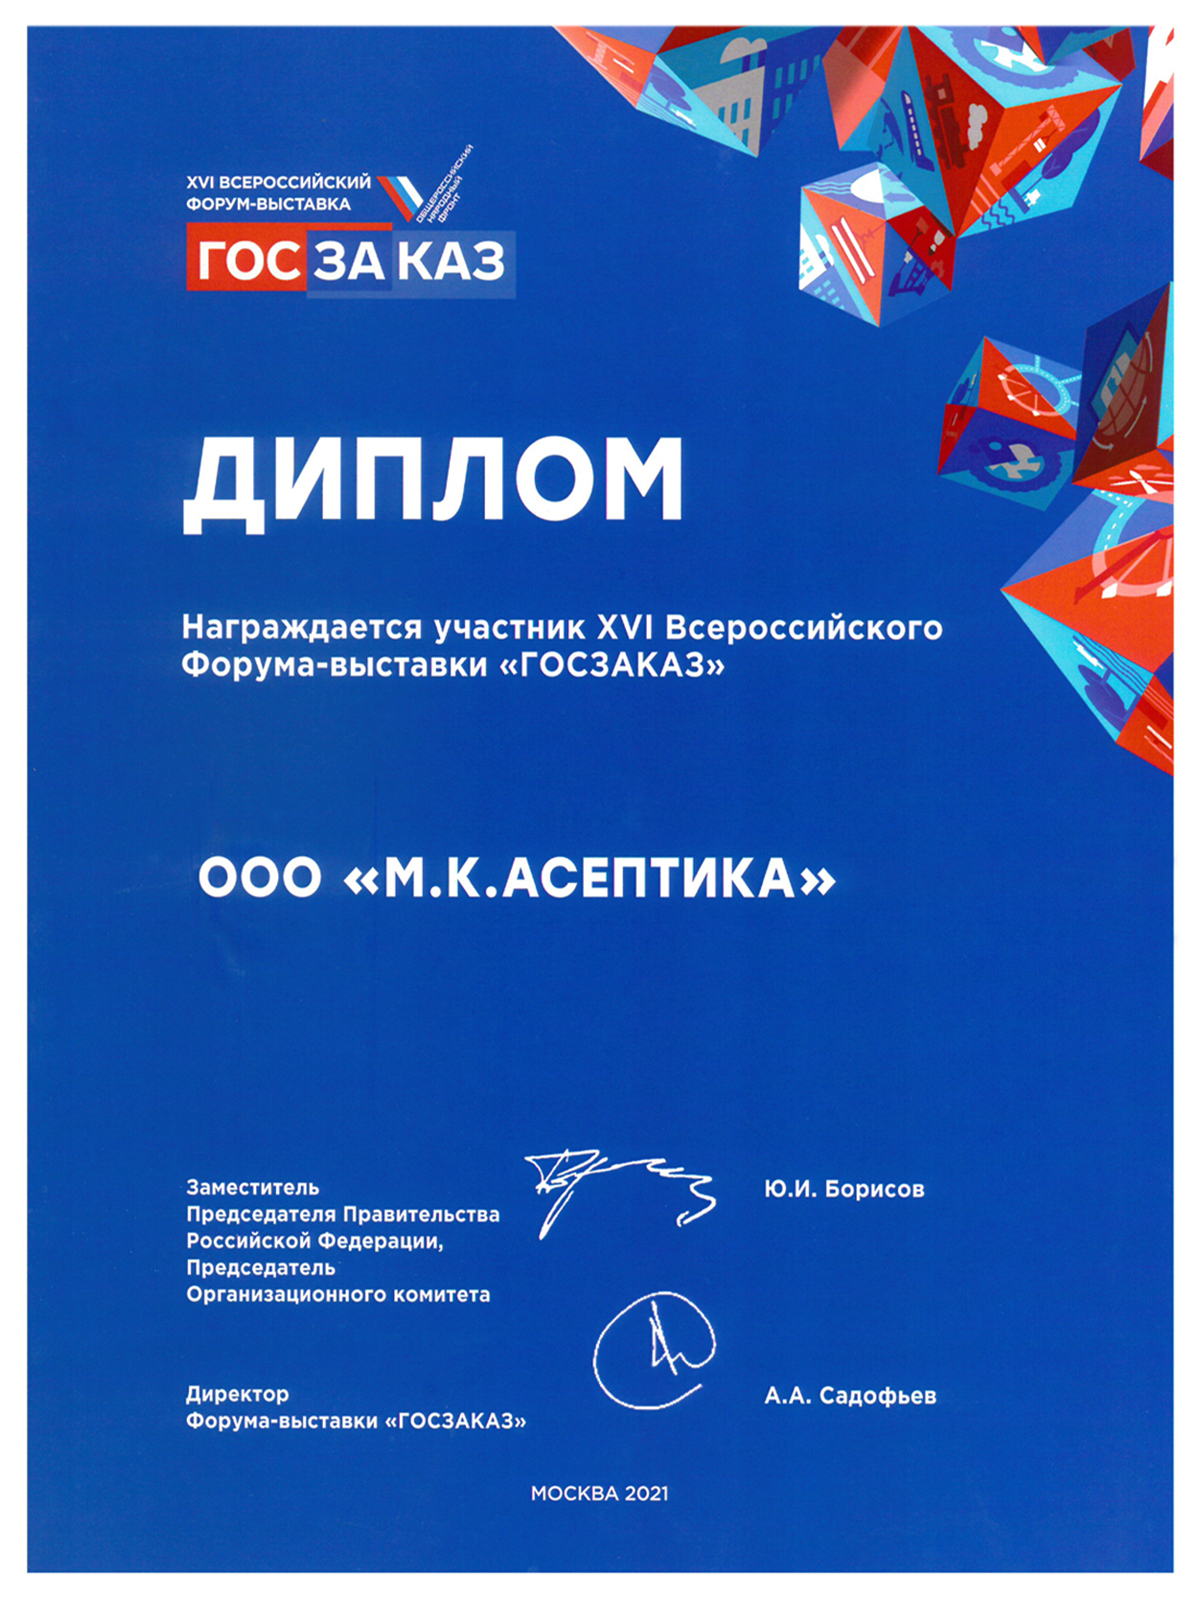 Diploma of participation of Goszakaz, the XVI All-Russian exhibition forum